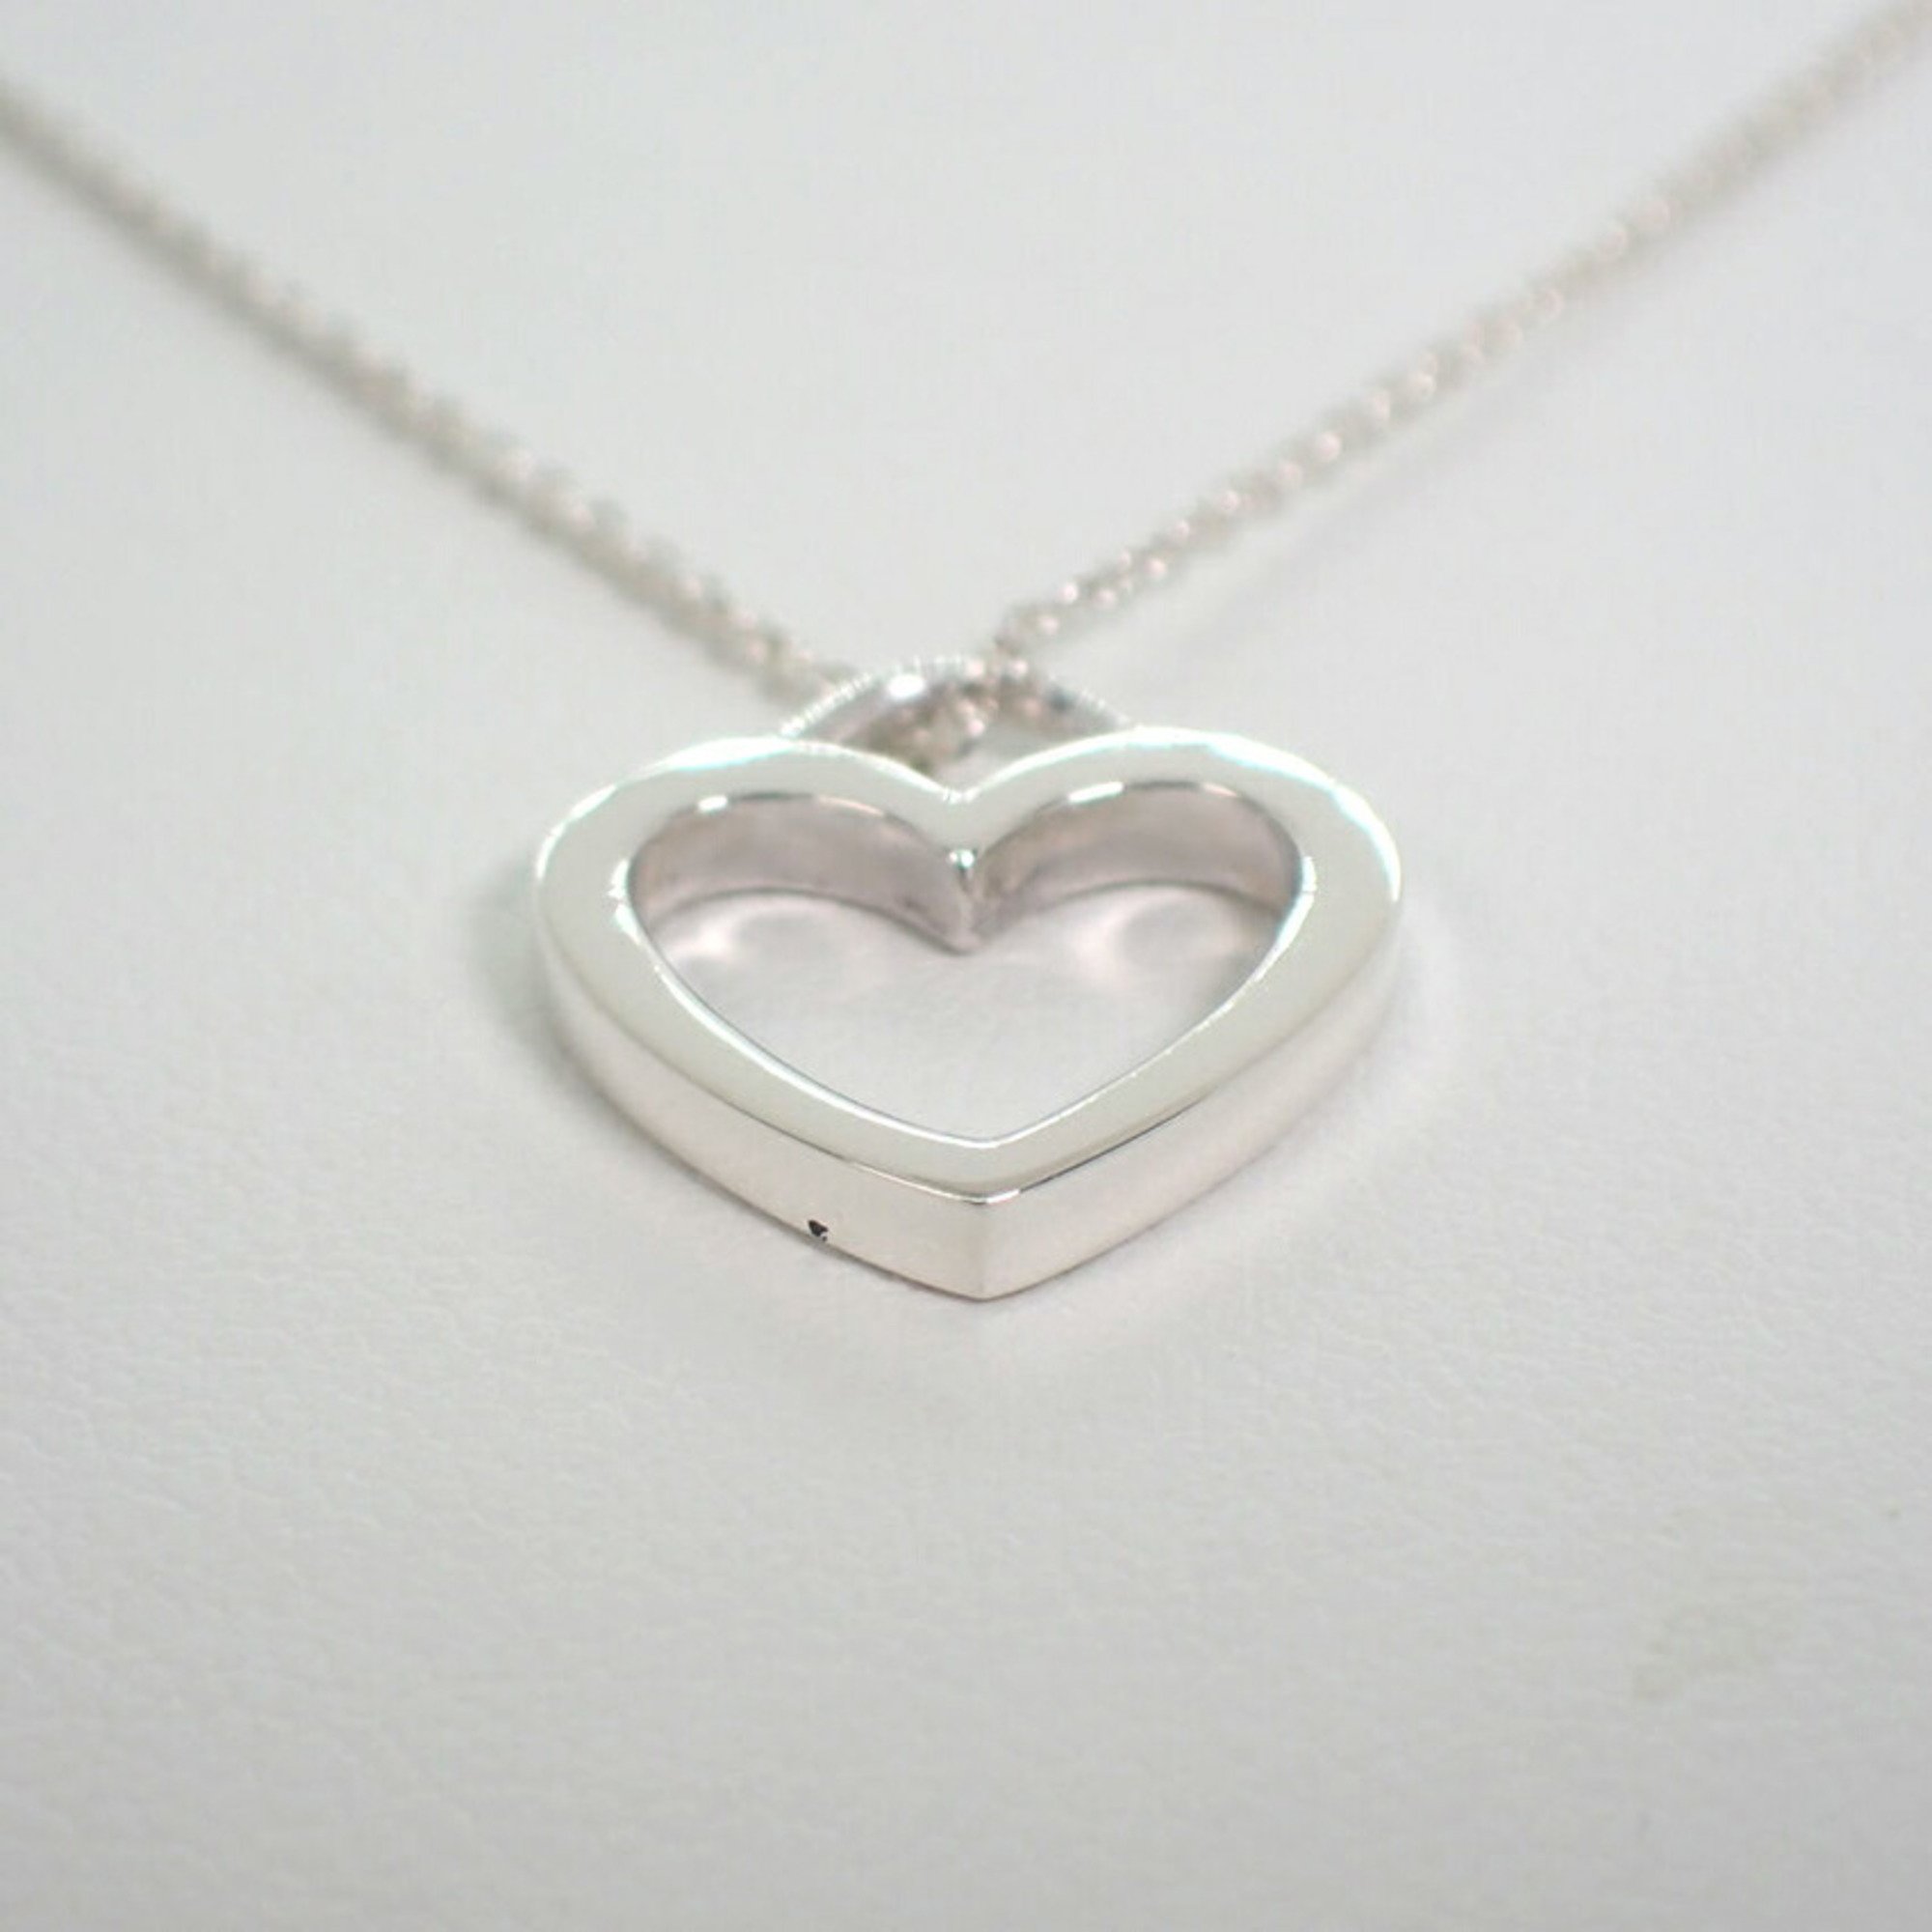 TIFFANY 925 sentimental heart pendant necklace